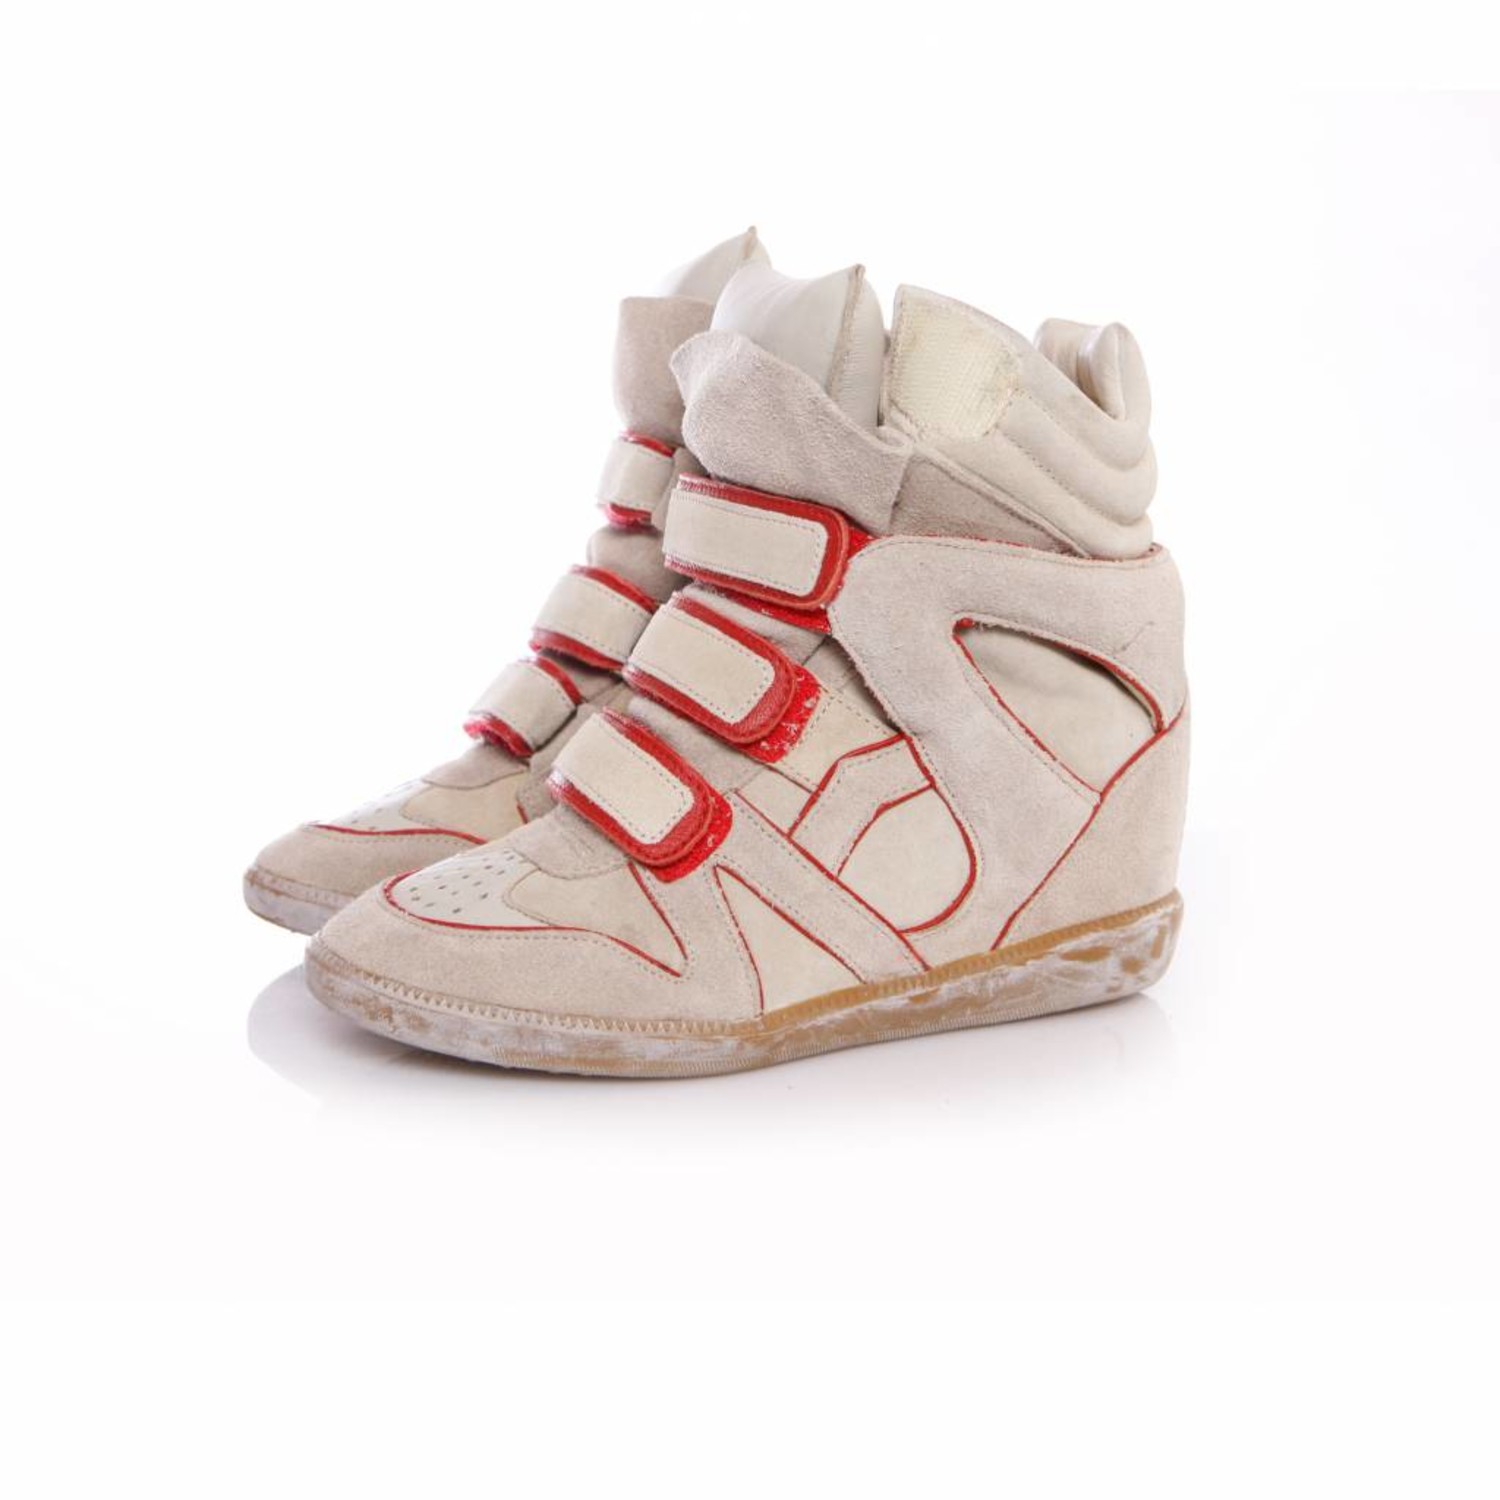 Isabel Marant Kindsay red Accent Sneakers Women's Size 39 7.5 8 Gazelle  Sambas | eBay